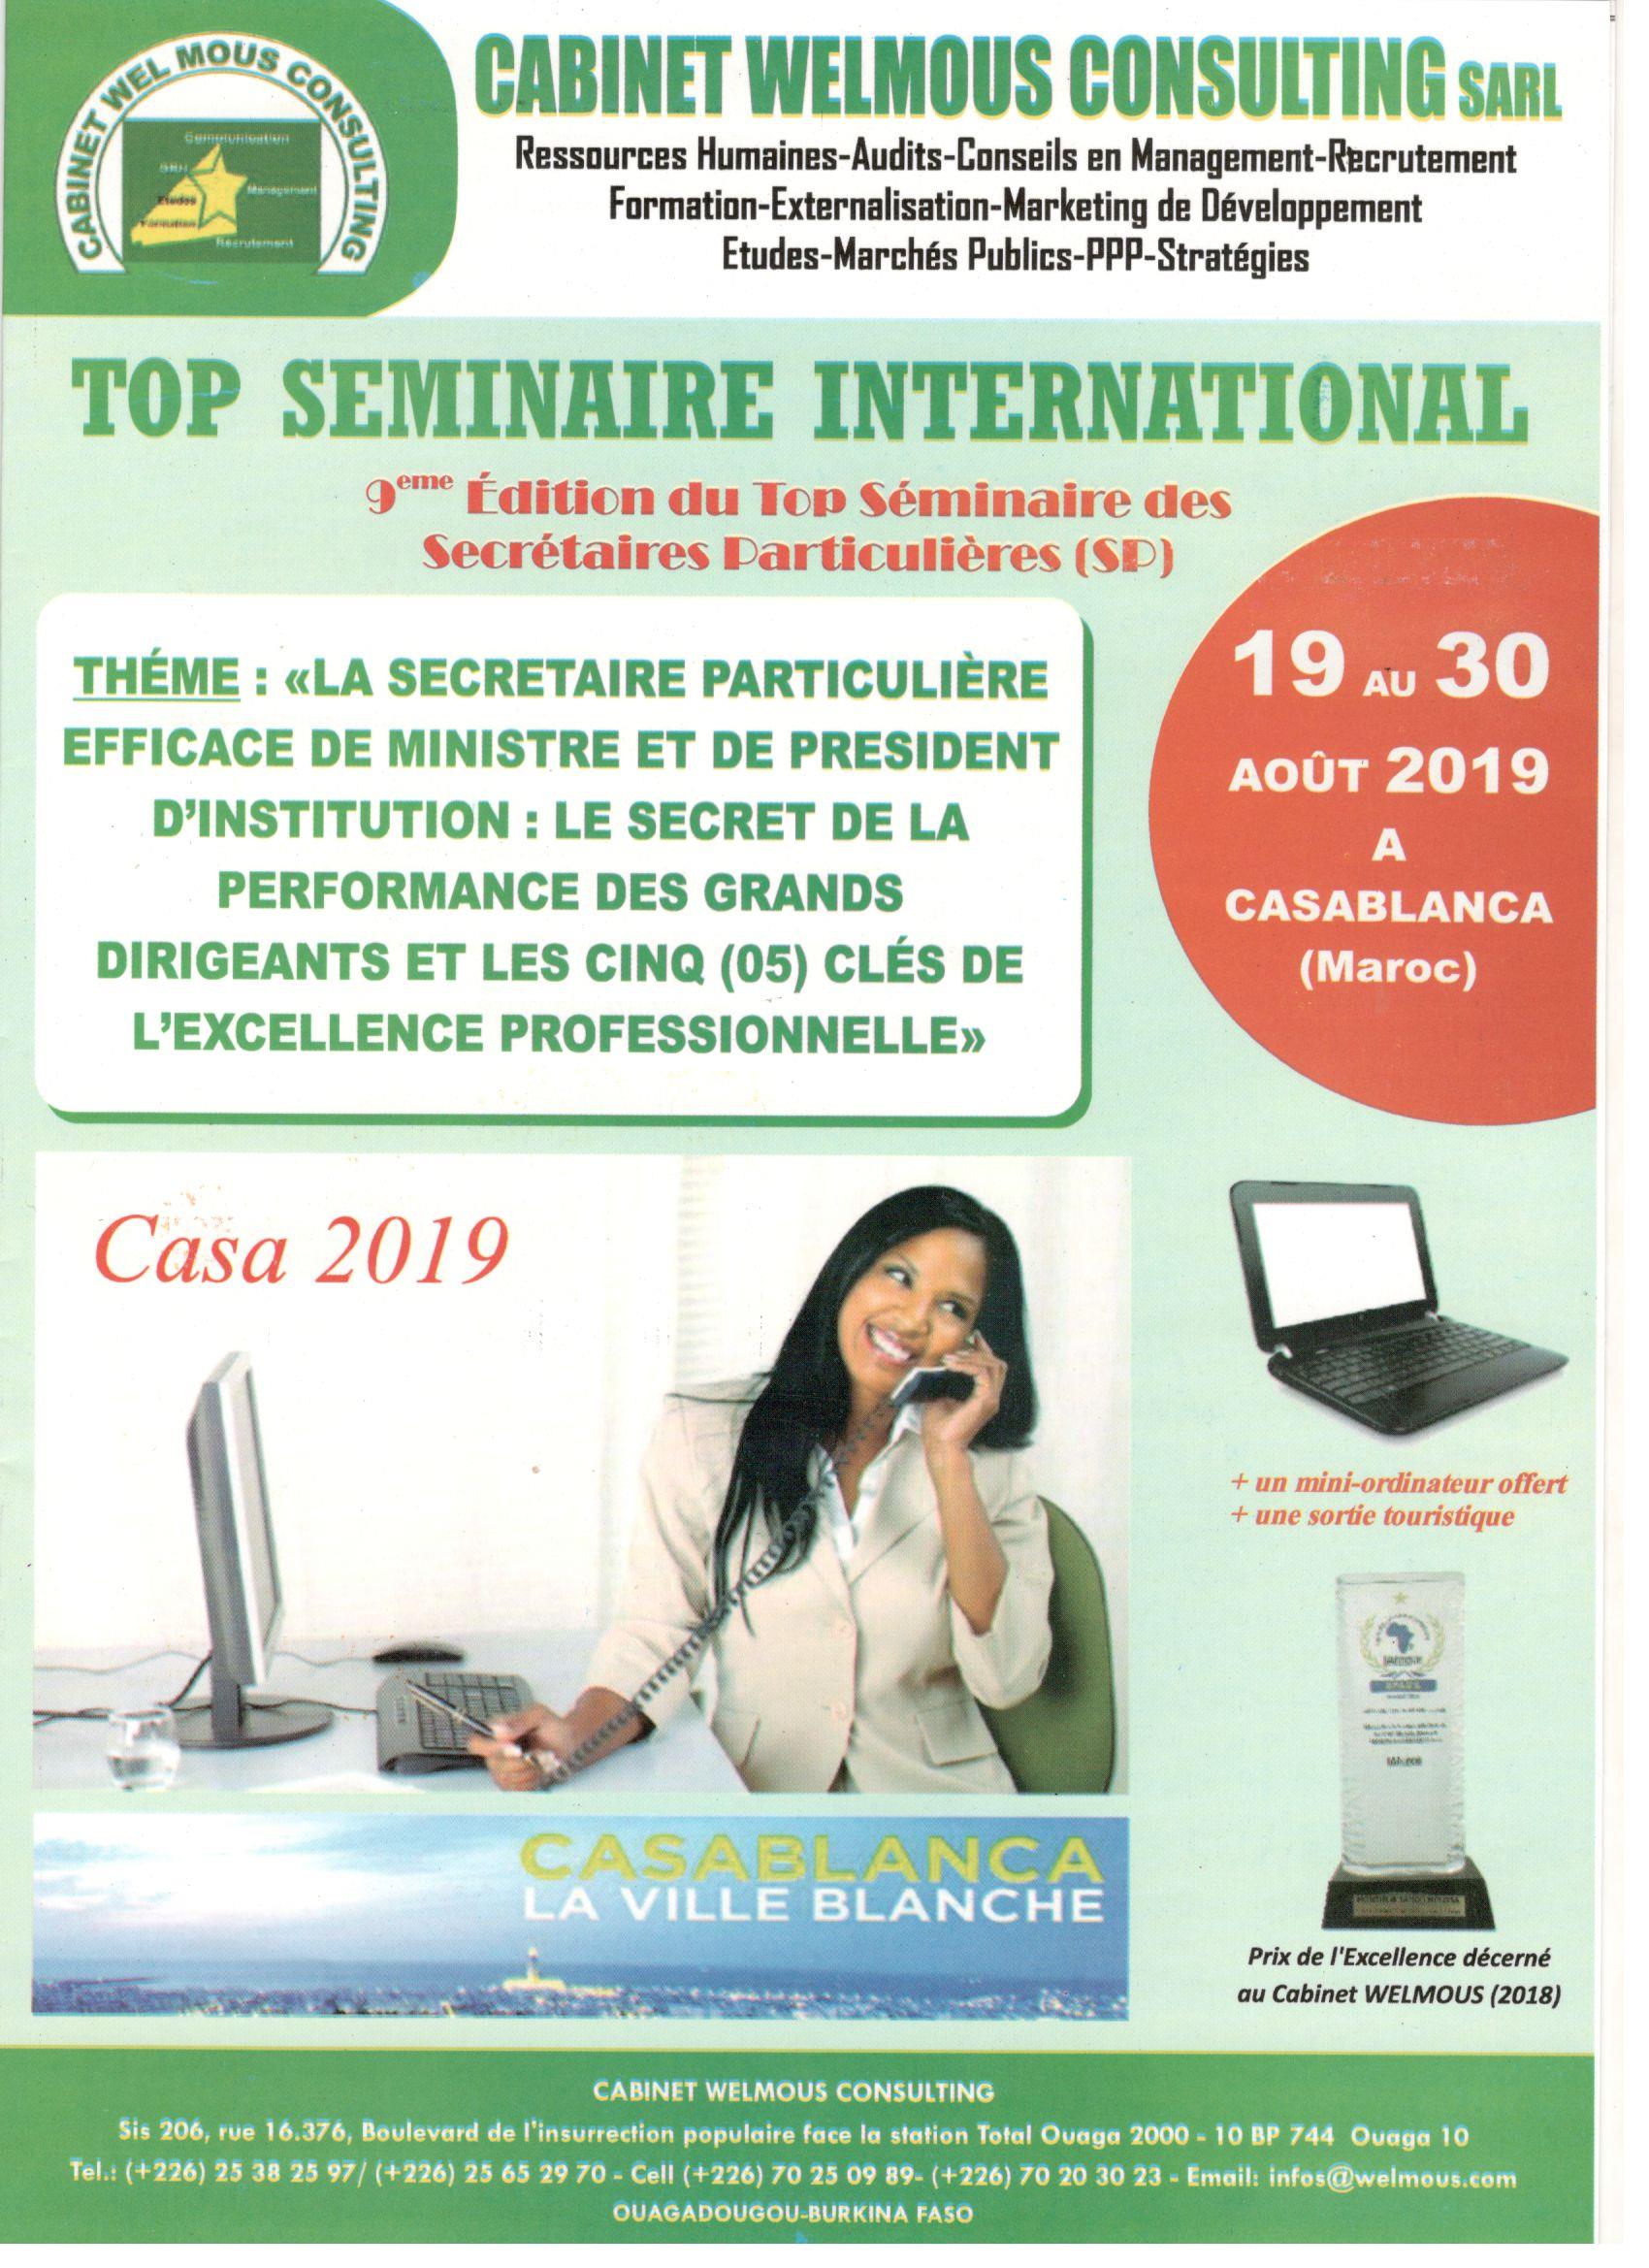 TOP Séminaire International 2019, du 19 au 30 Août 2019 à Casablanca (Maroc).